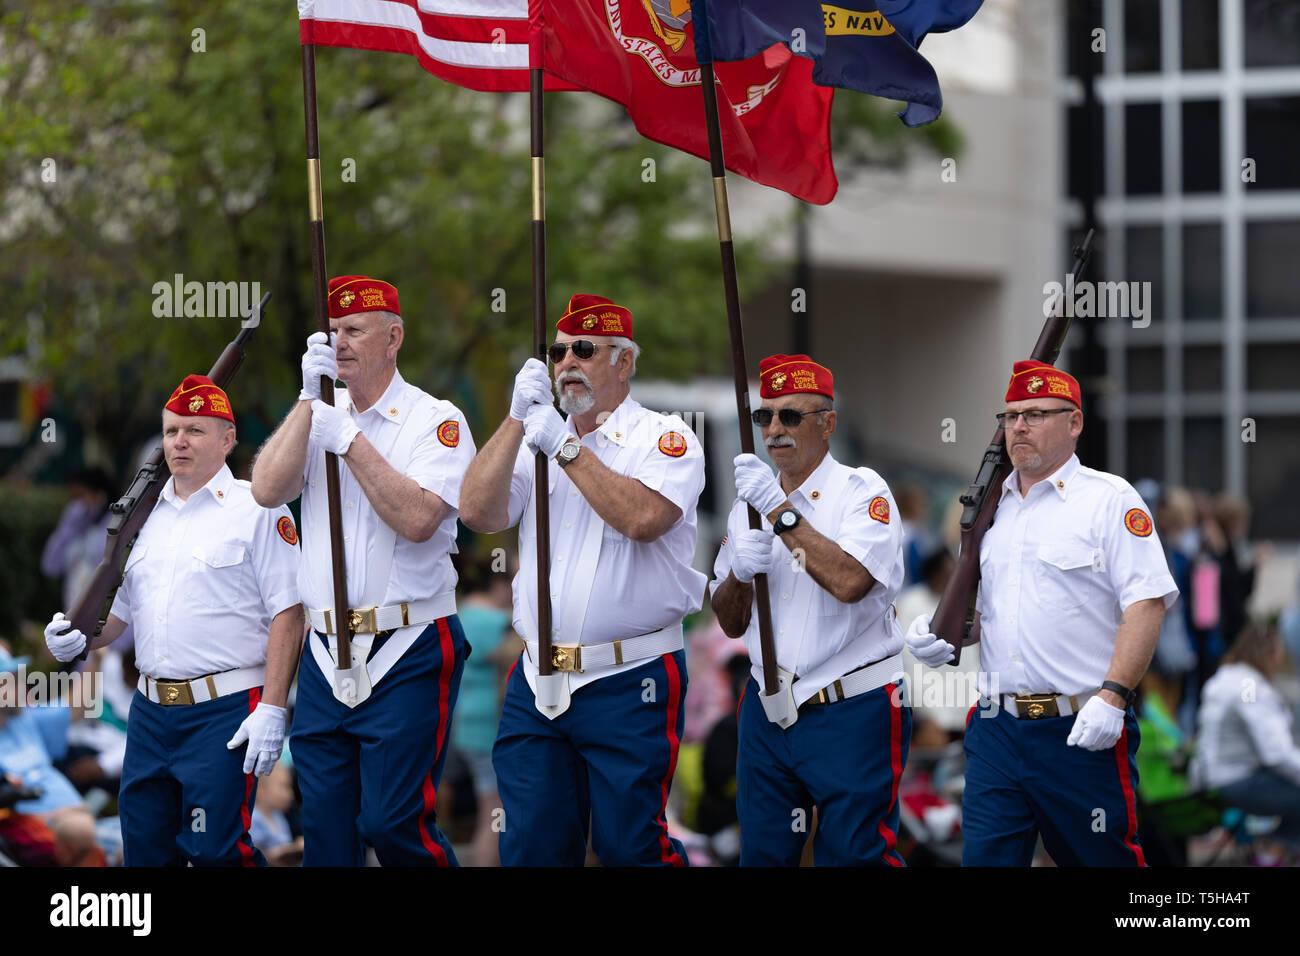 Wilmington, North Carolina, USA - April 6, 2019: The North Carolina Azalea Festival, Members of the Marine Corps League, marching down 3rd street carr Stock Photo